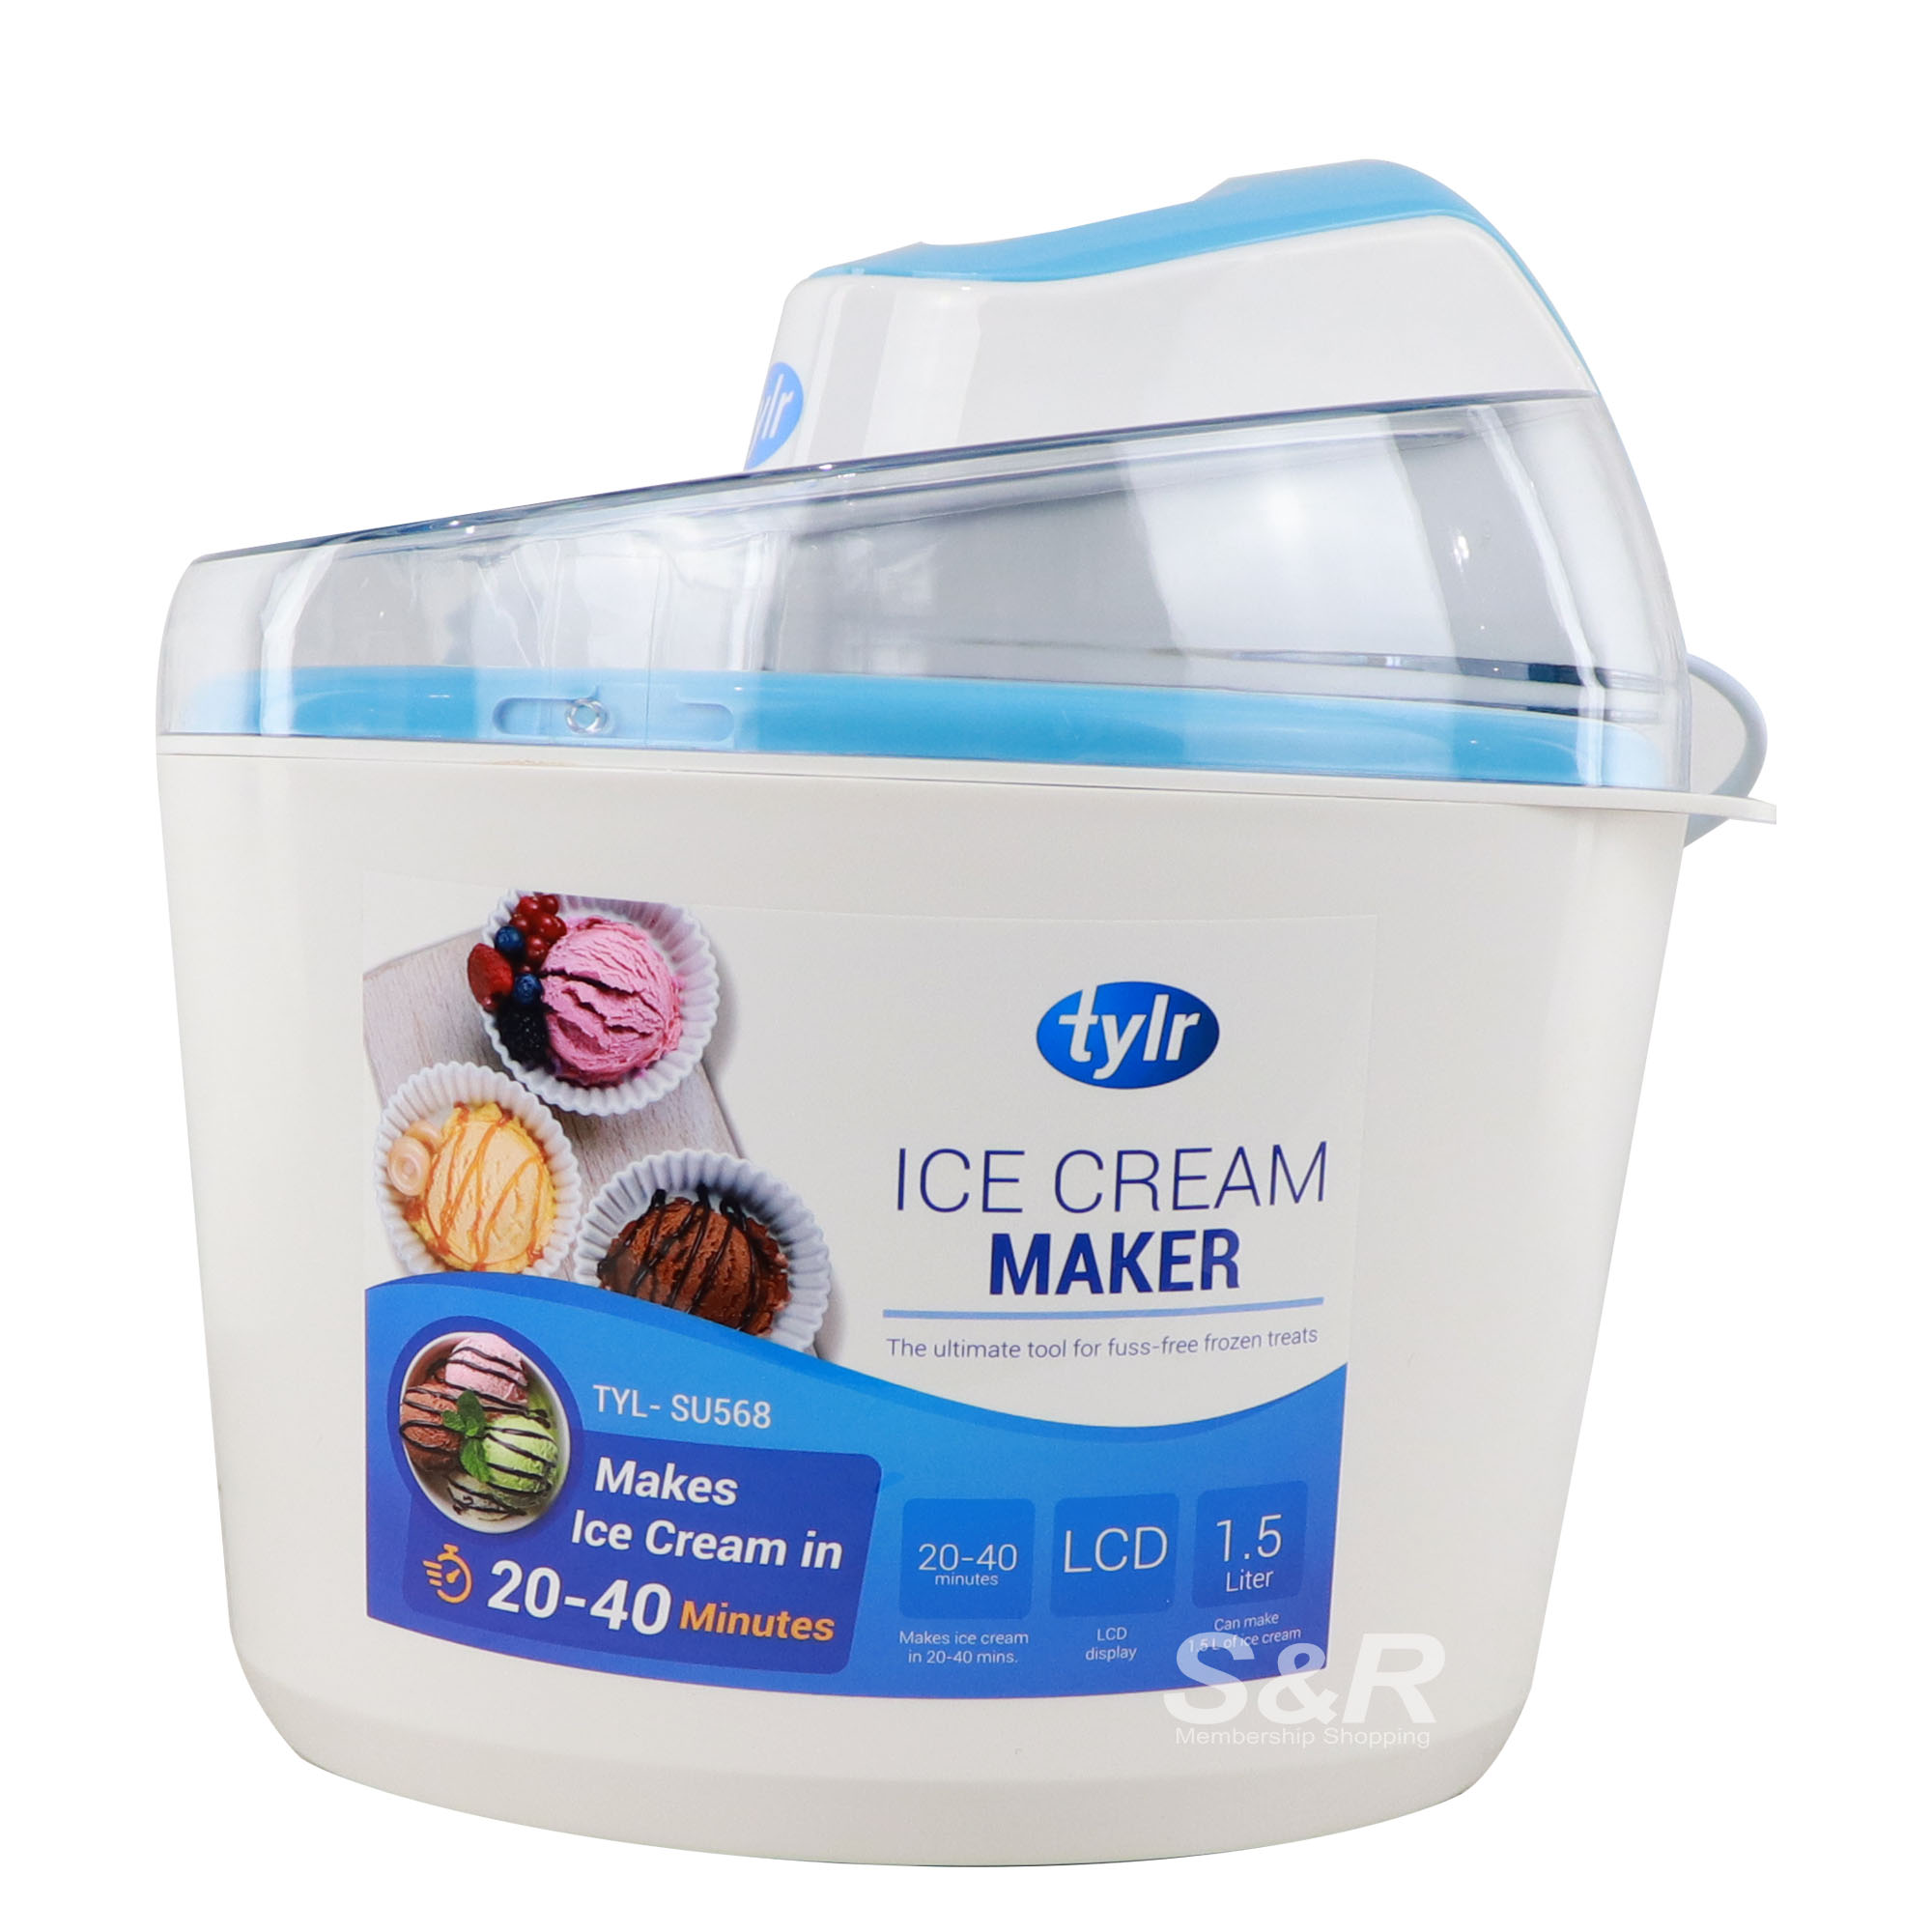 Tylr Electric Ice Cream Maker TYL-SU568